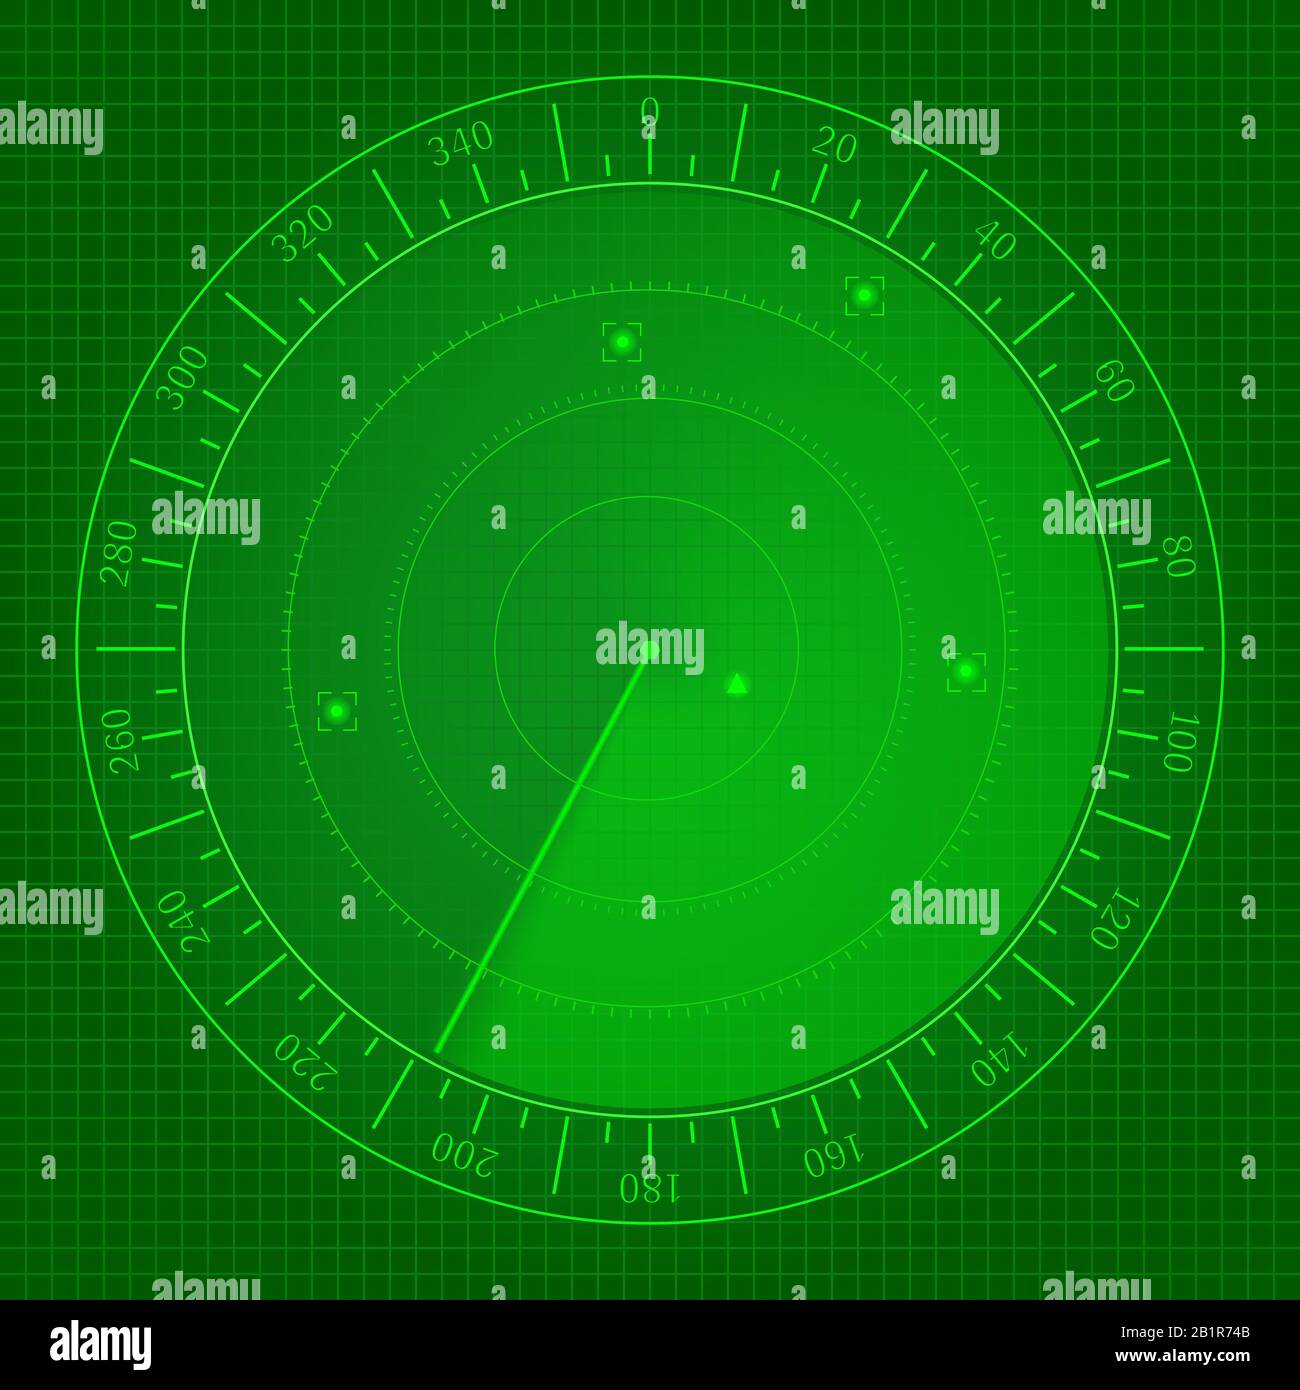 Grüner Radarbildschirm Stock Vektor